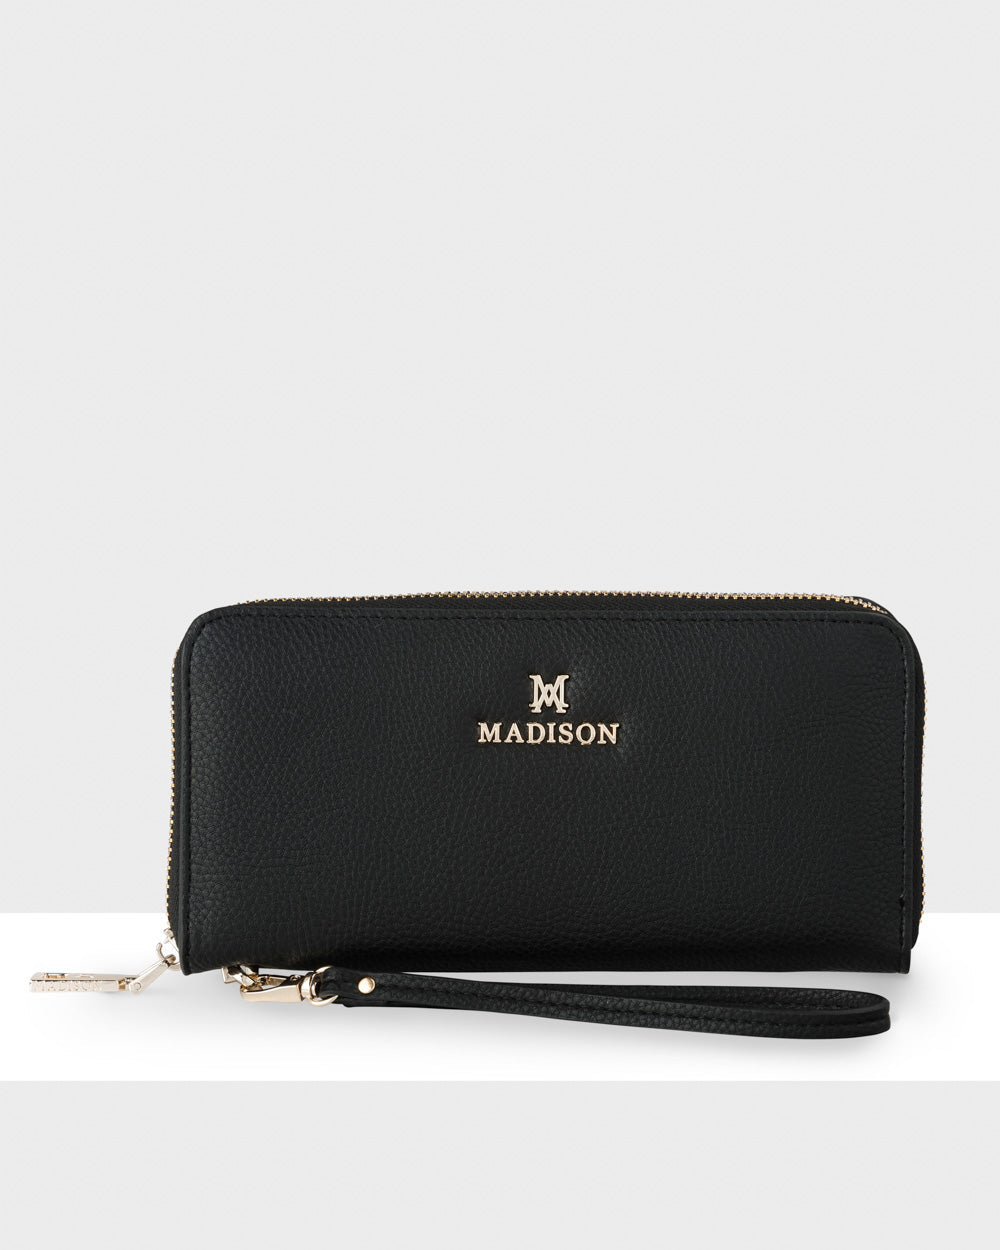 Handbag, Wallet, Coinpurse & Personalisation Charm Giftbox - Grace Dome Satchel & Mini Coinpurse-8